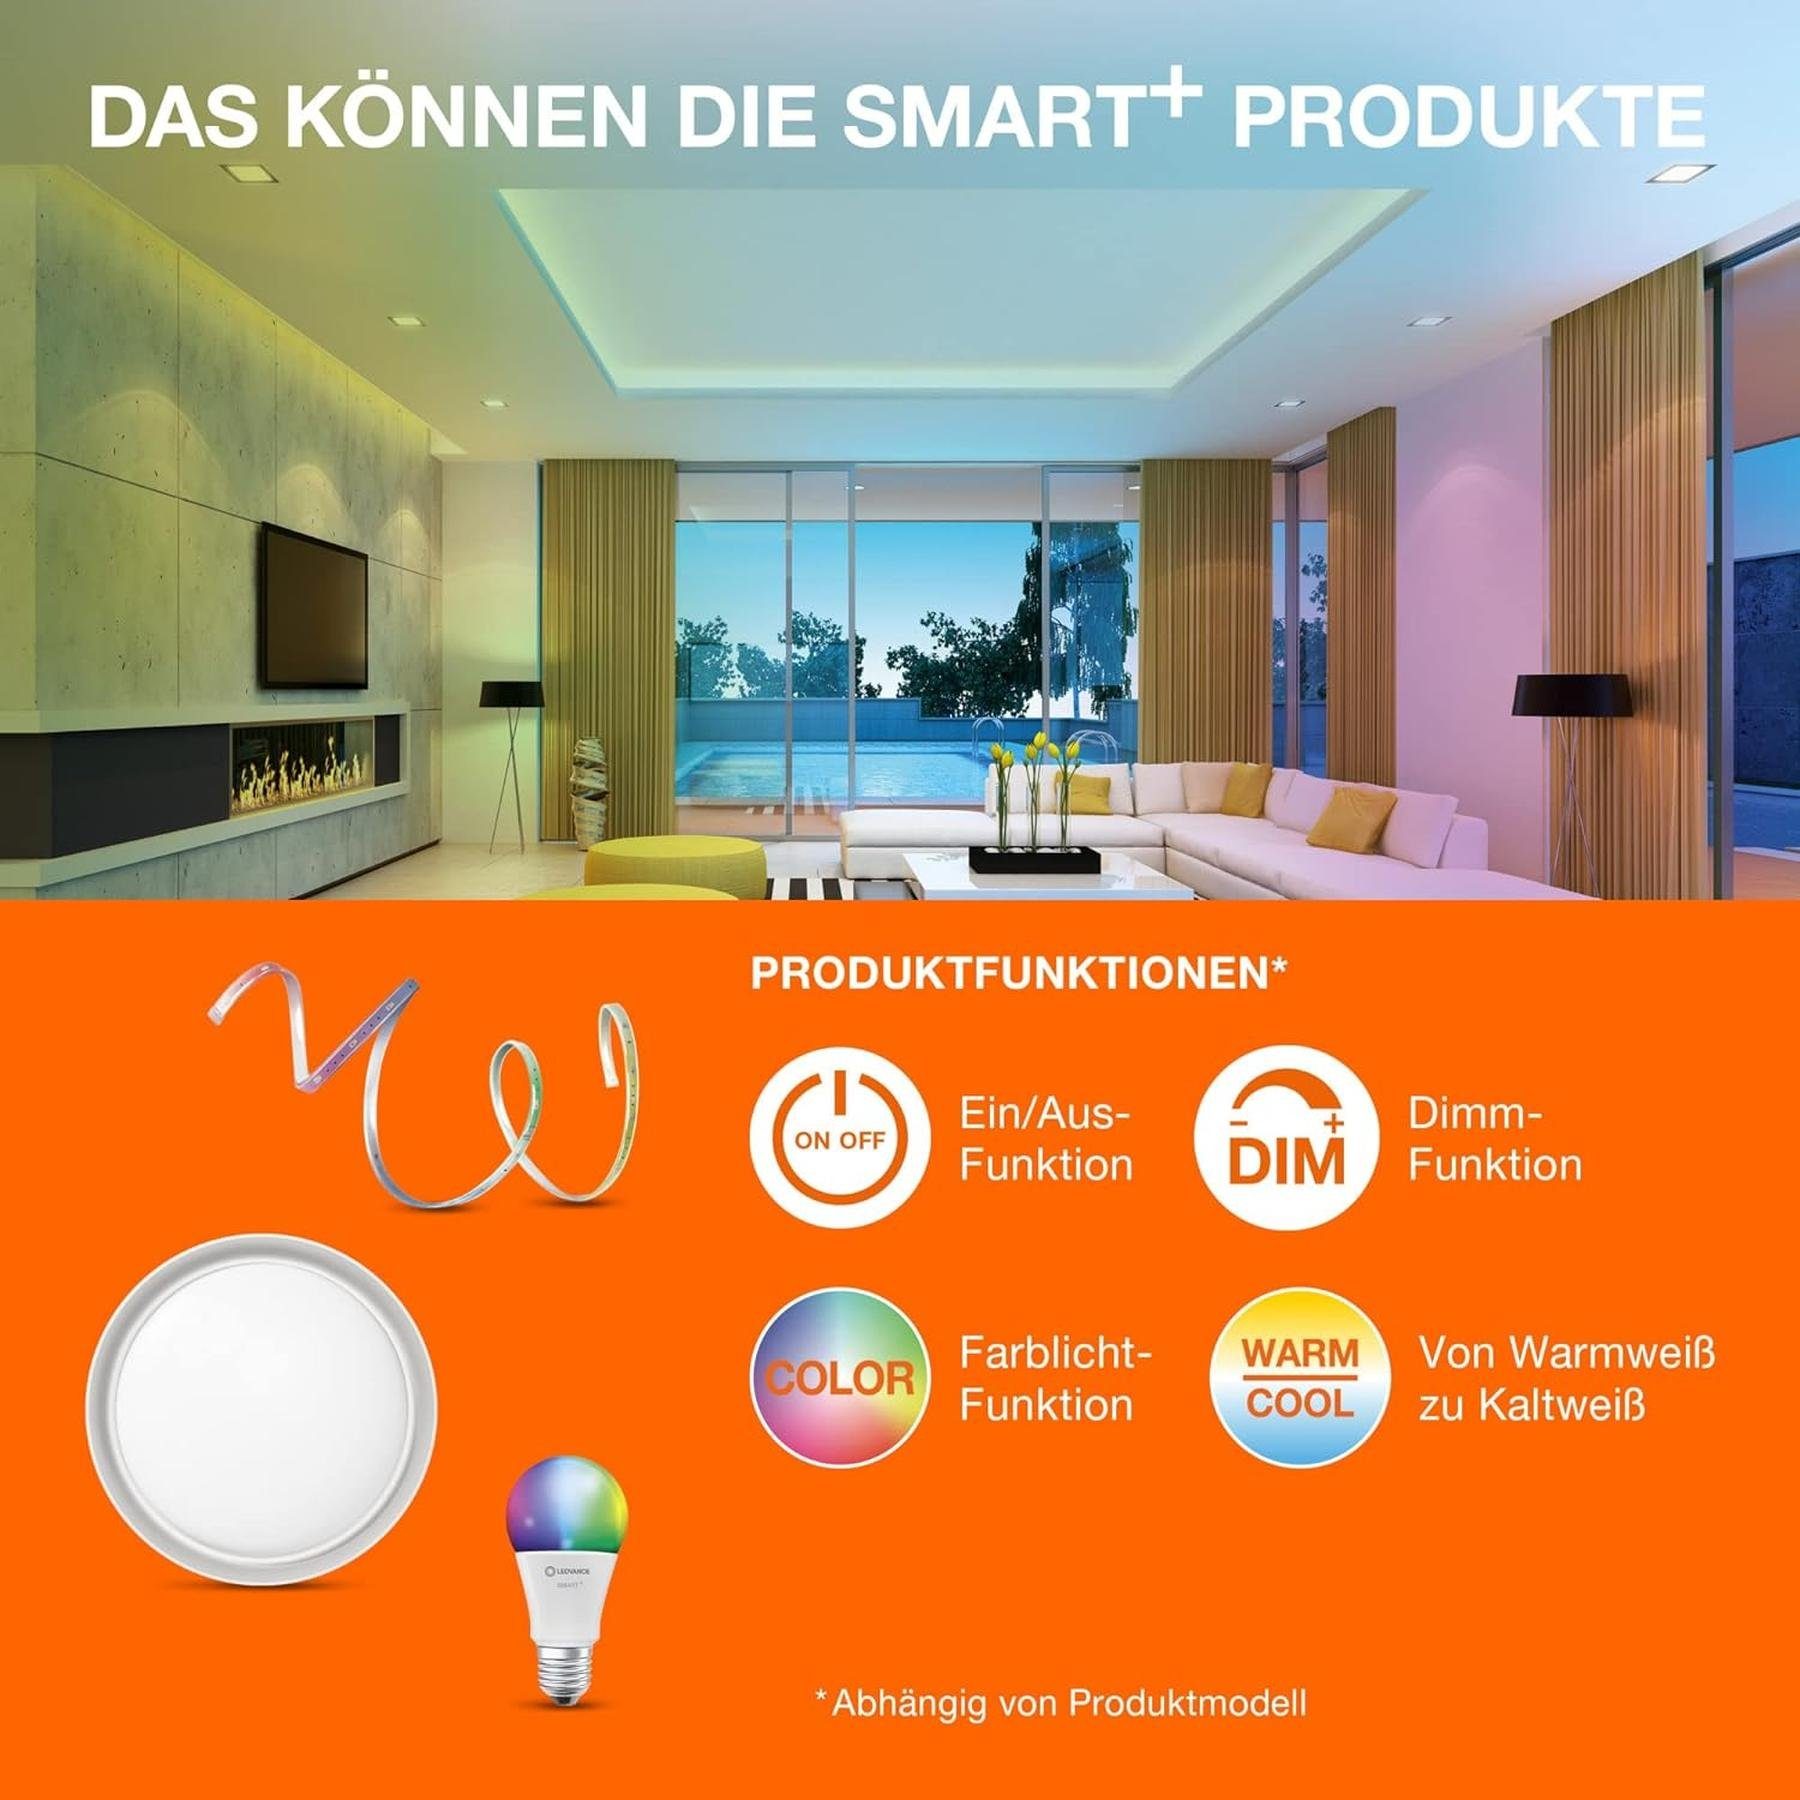 E14 dimmbar ZigBee, Ledvance Ledvance E14, Smart Änderbar, LED-Leuchtmittel RGB Lampe LED Lichtfarbe mini